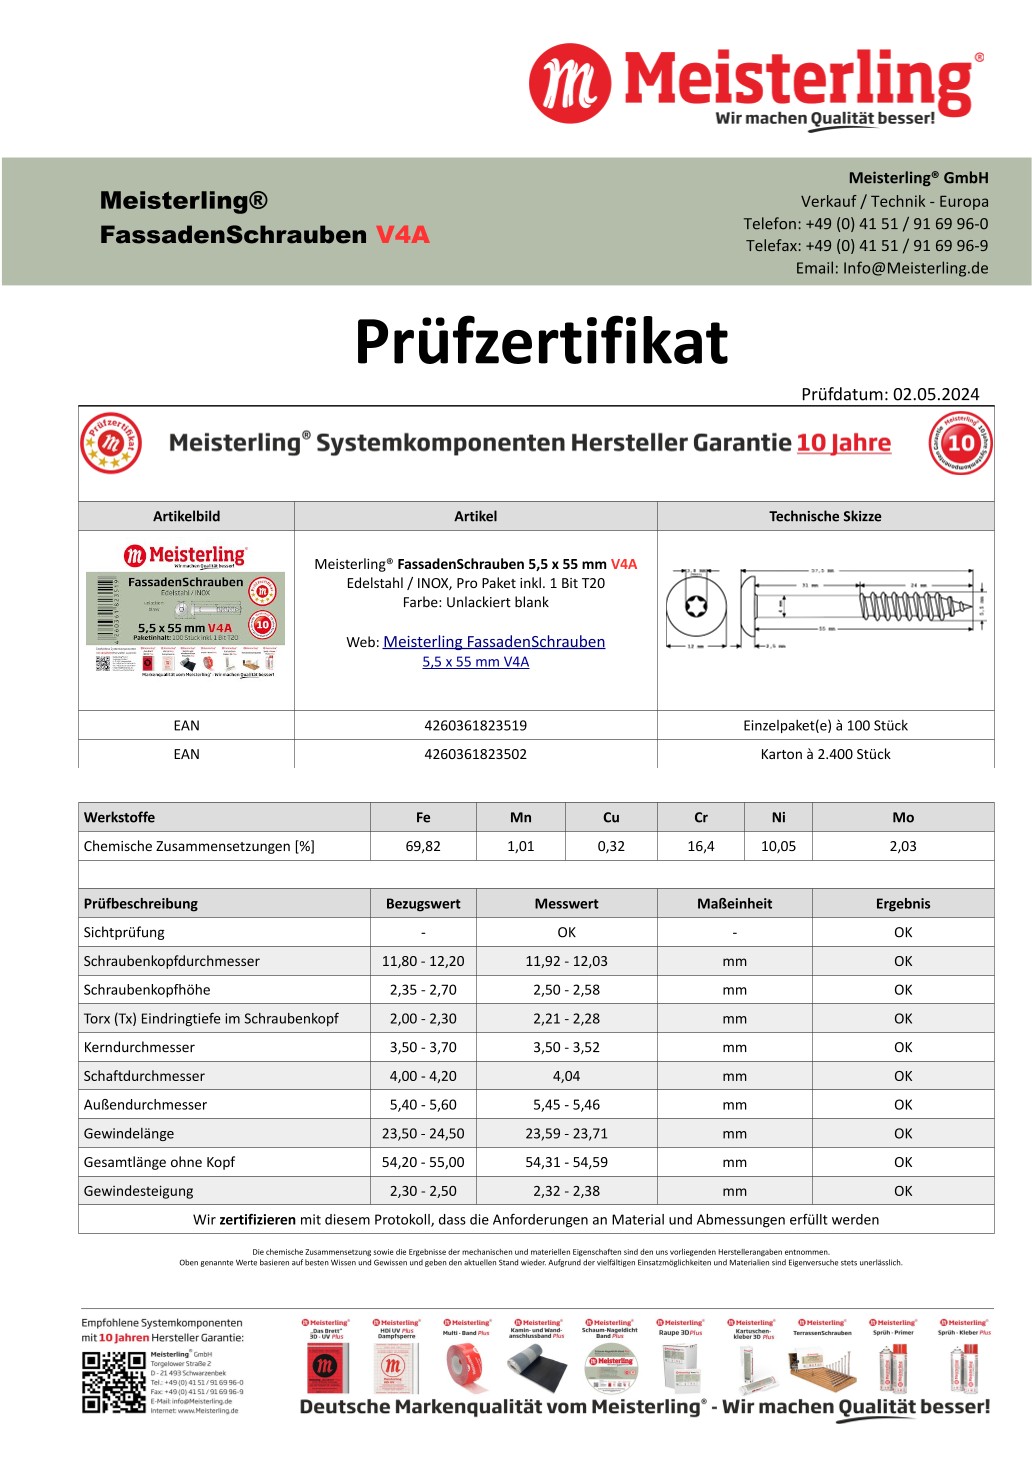 Prüfzertifikat Meisterling® FassadenSchrauben 5,5 x 55 mm V4a blank